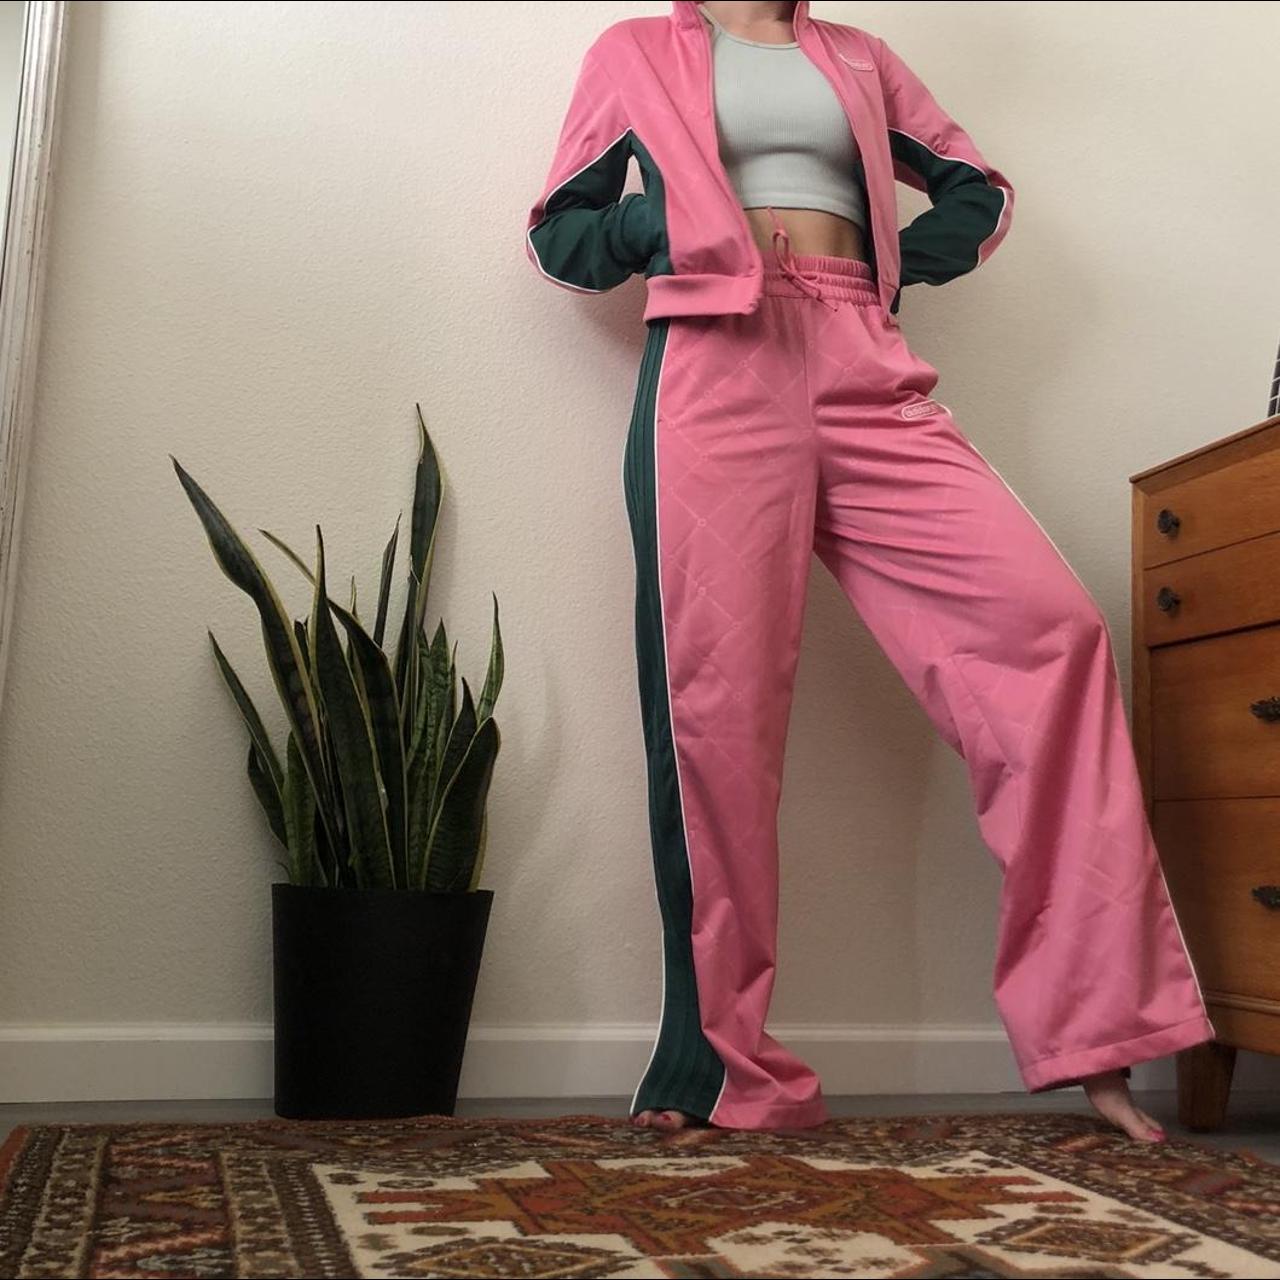 adidas Originals Jumpsuit - mauve/light pink - Zalando.de